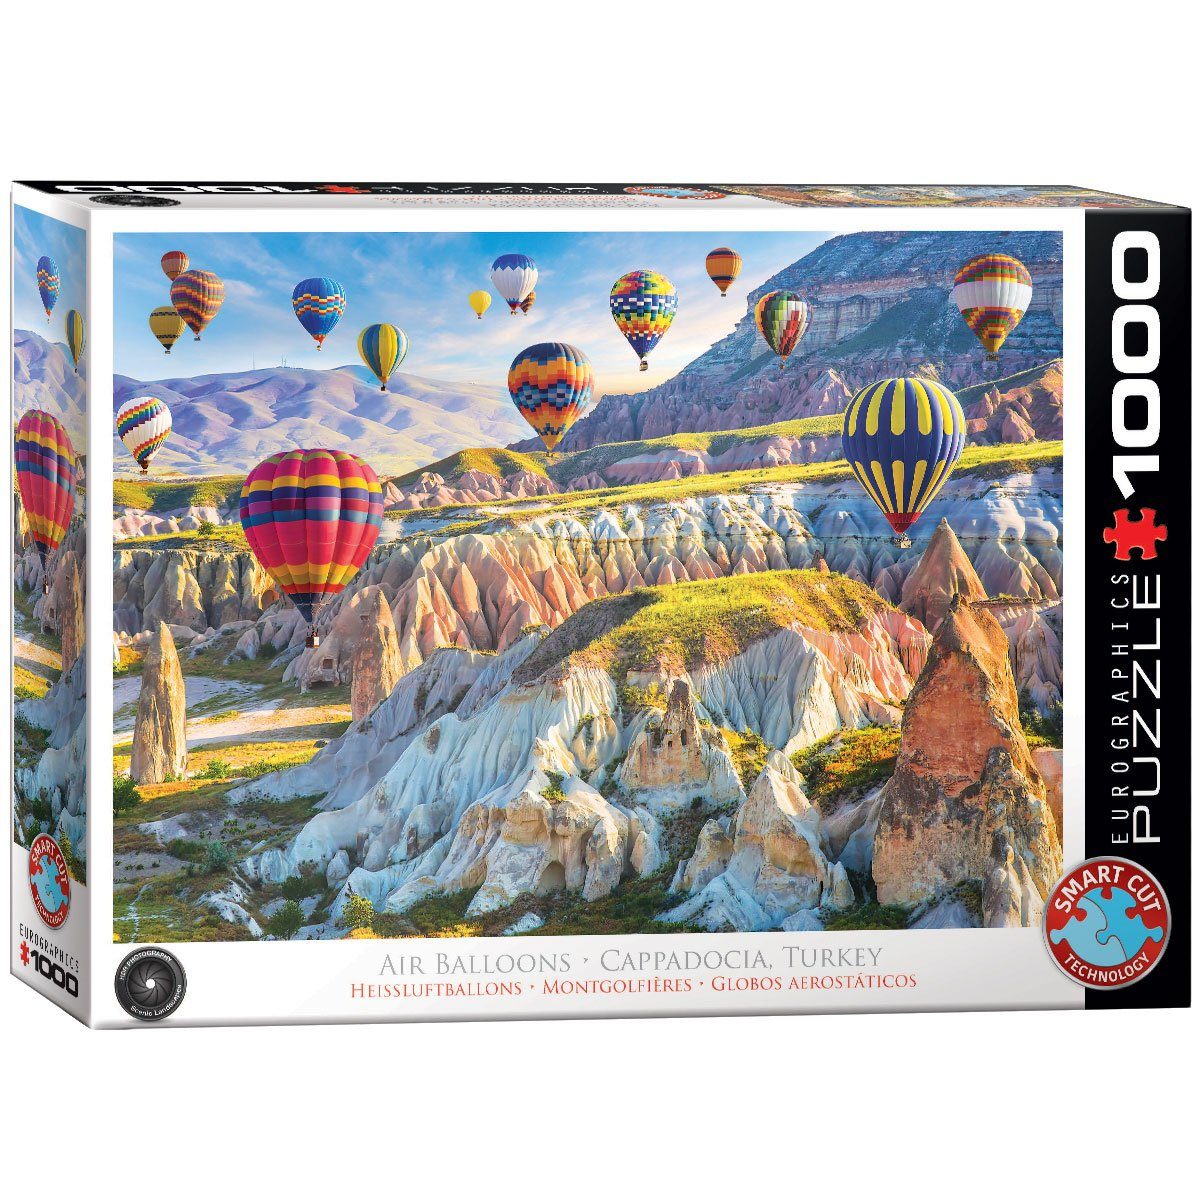 EUROGRAPHICS Puzzle Heißluftballons Cappadocia, Türkei Puzzle, 1000 Puzzleteile, Made in Europe